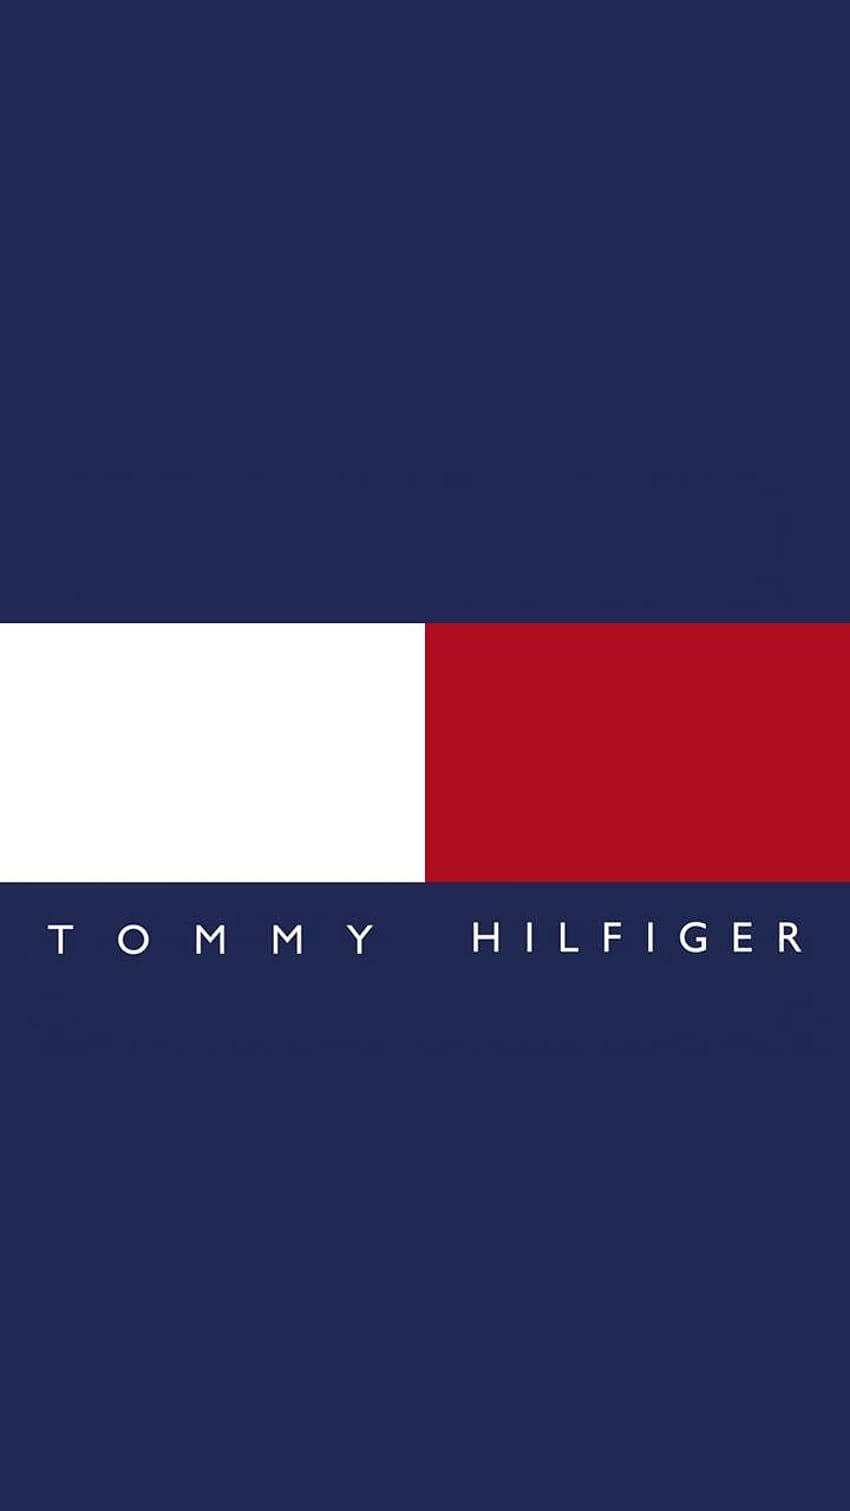 TOMMY HILFIGER DENIM LOGO iPhone 14 Pro Max Case Cover